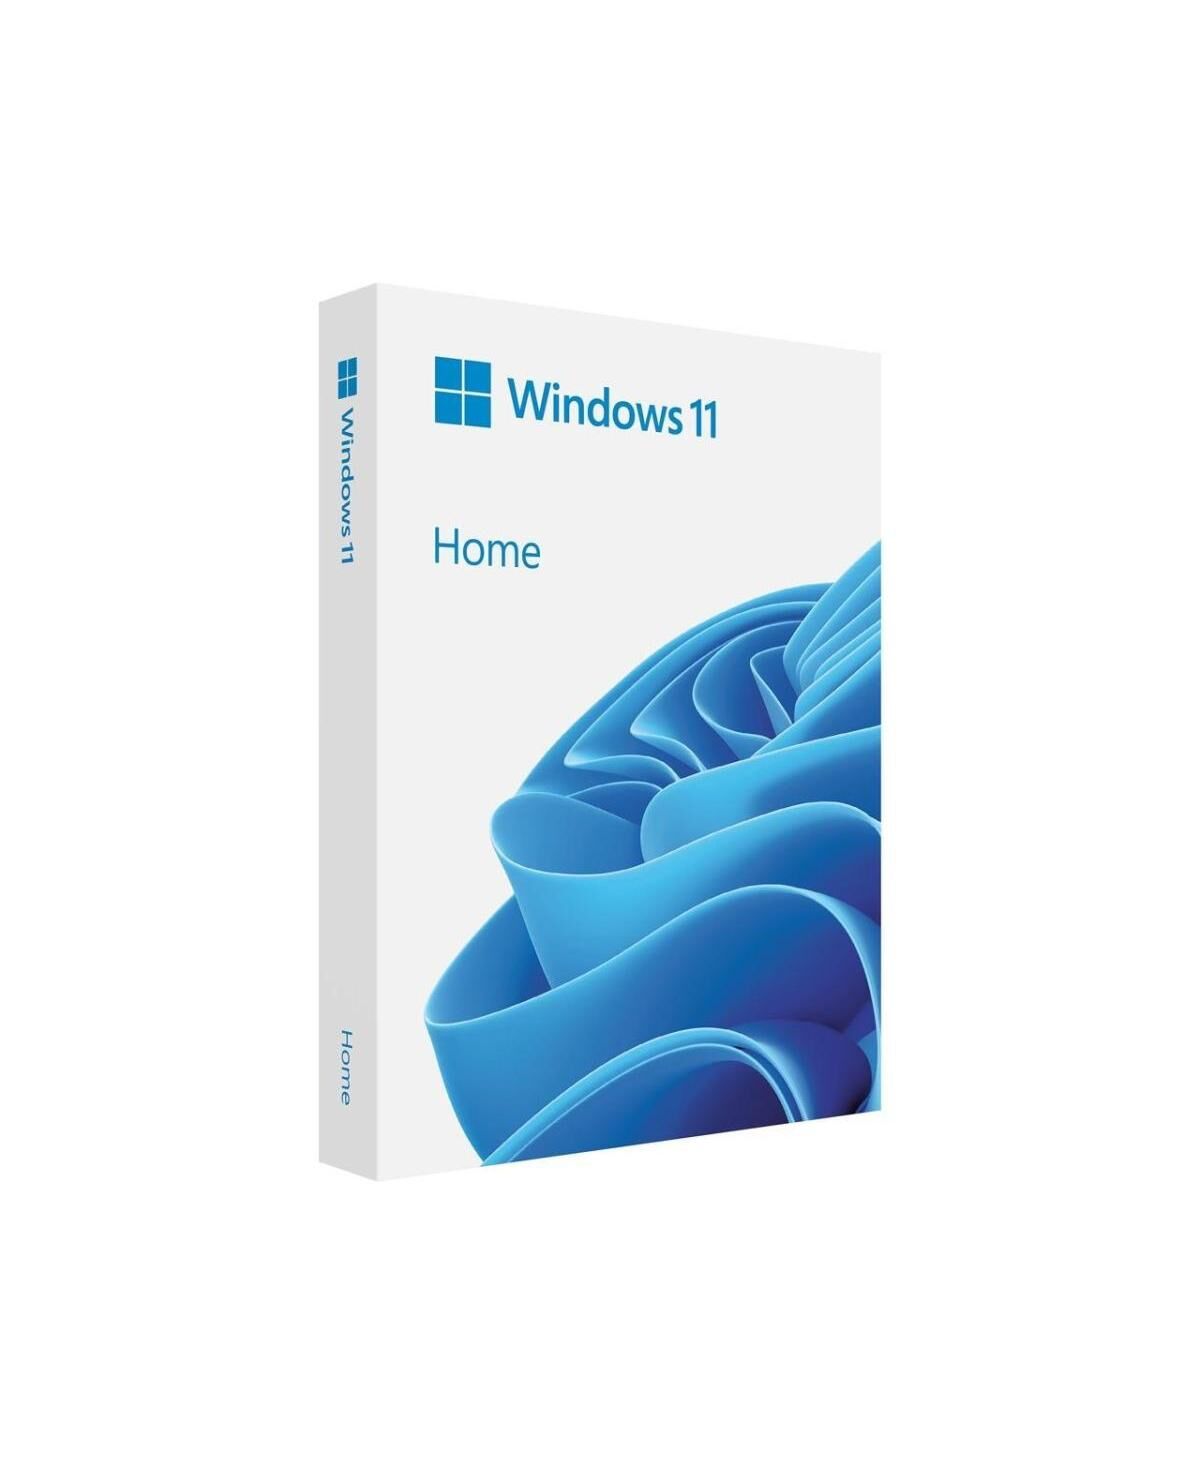 Microsoft Haj-00108 Windows 11 Home Usb Flash Drive - White